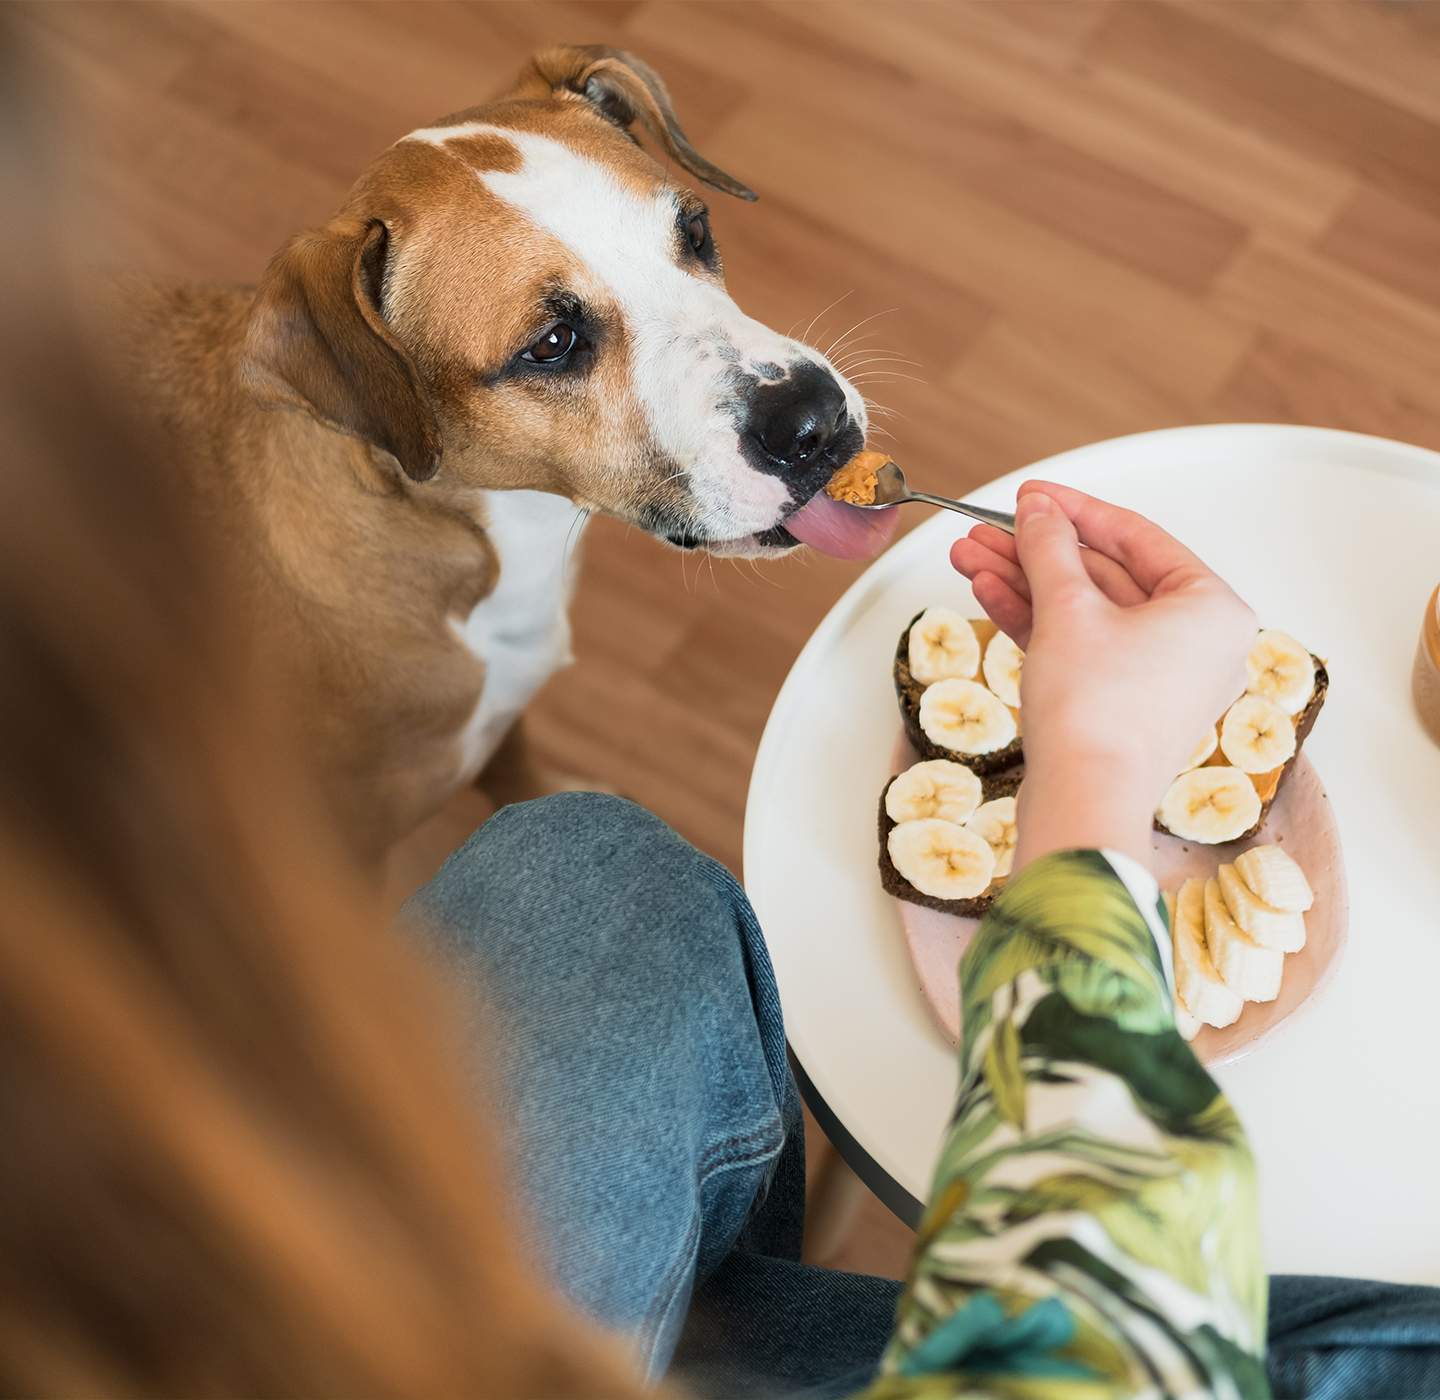 Human feeding dog with spoon